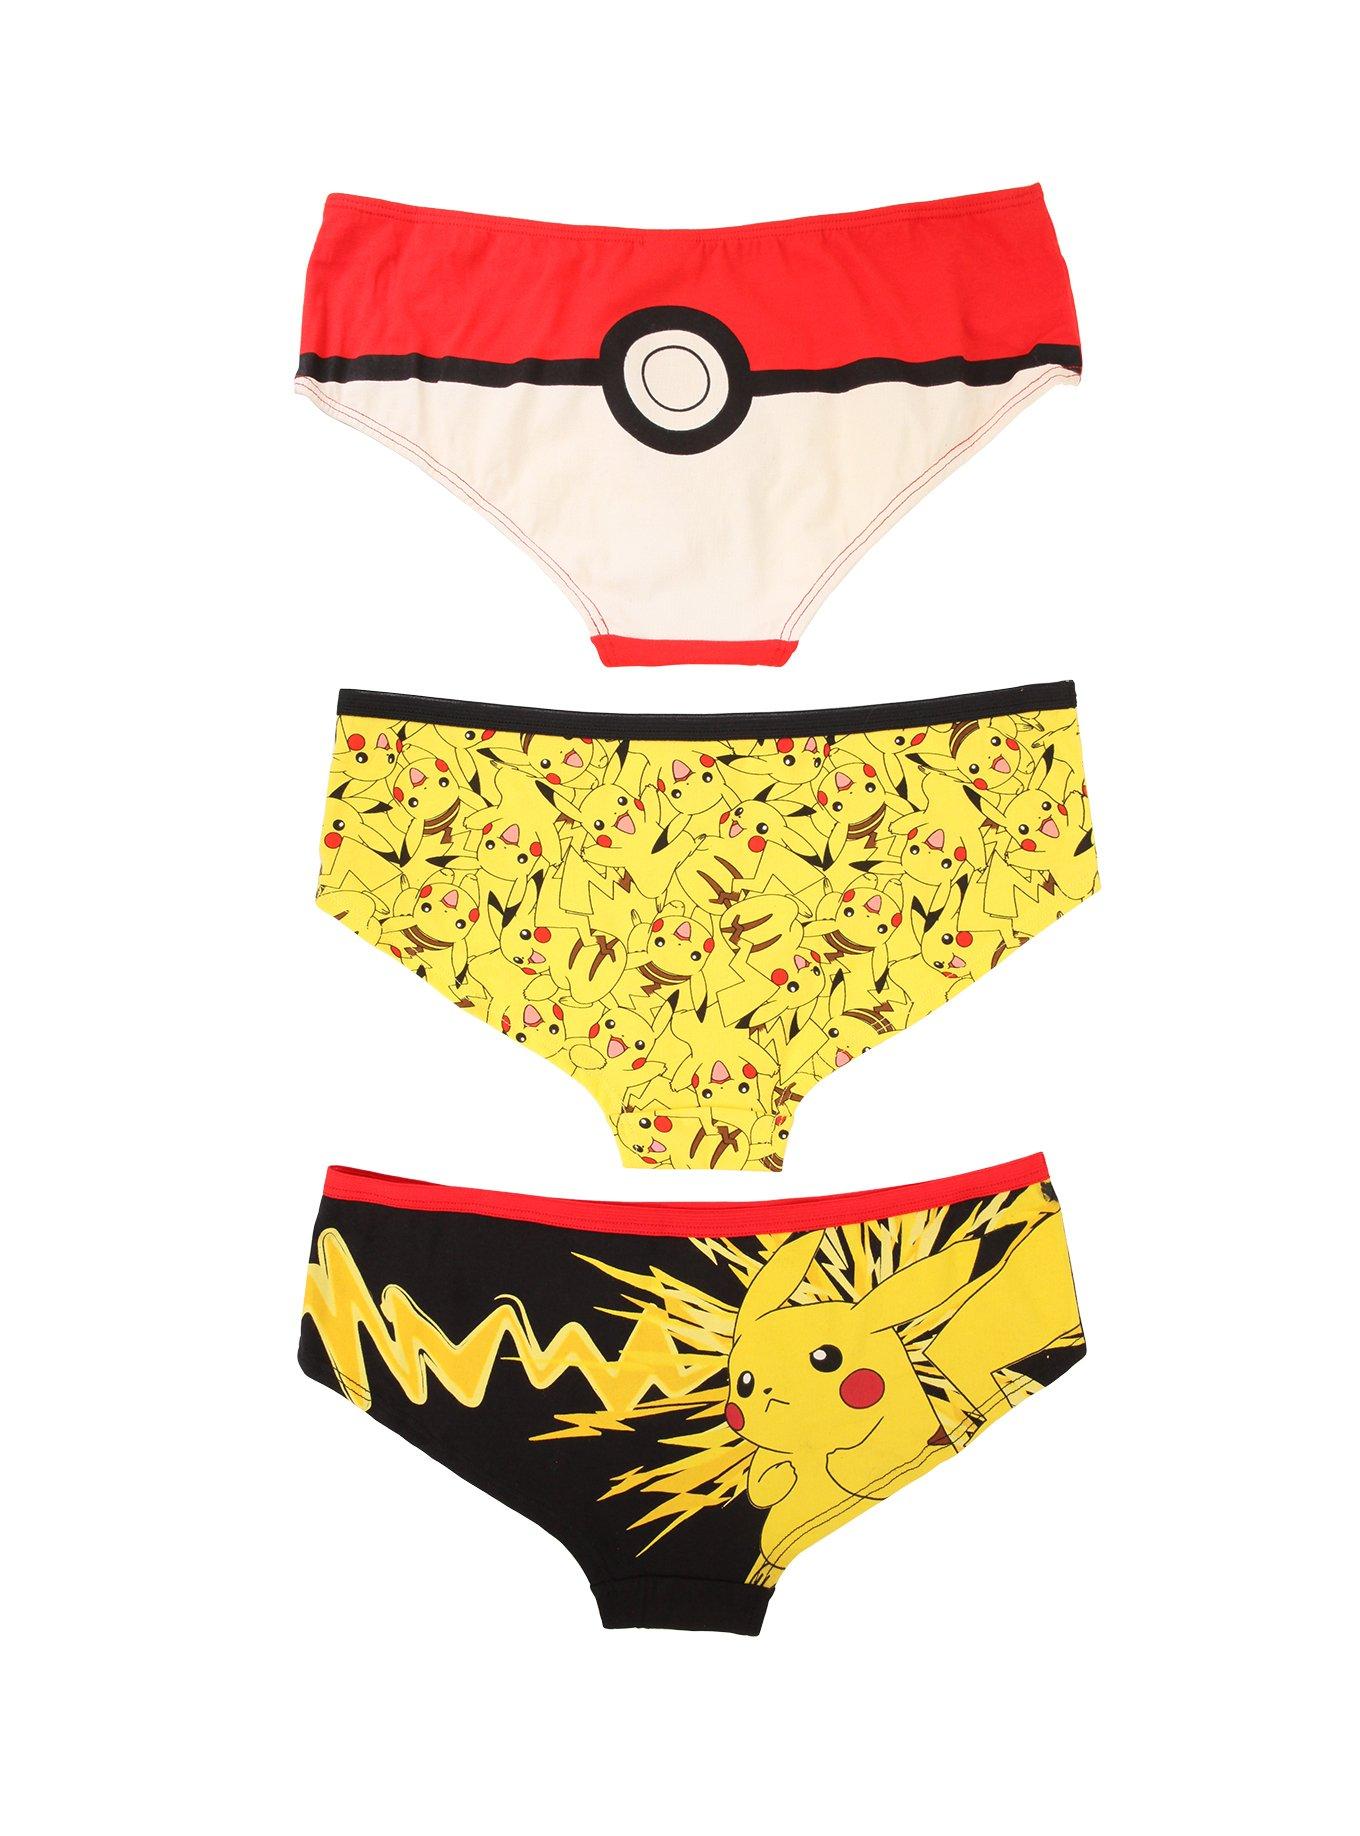 Pokemon Panties, Girls Cartoon Underwear